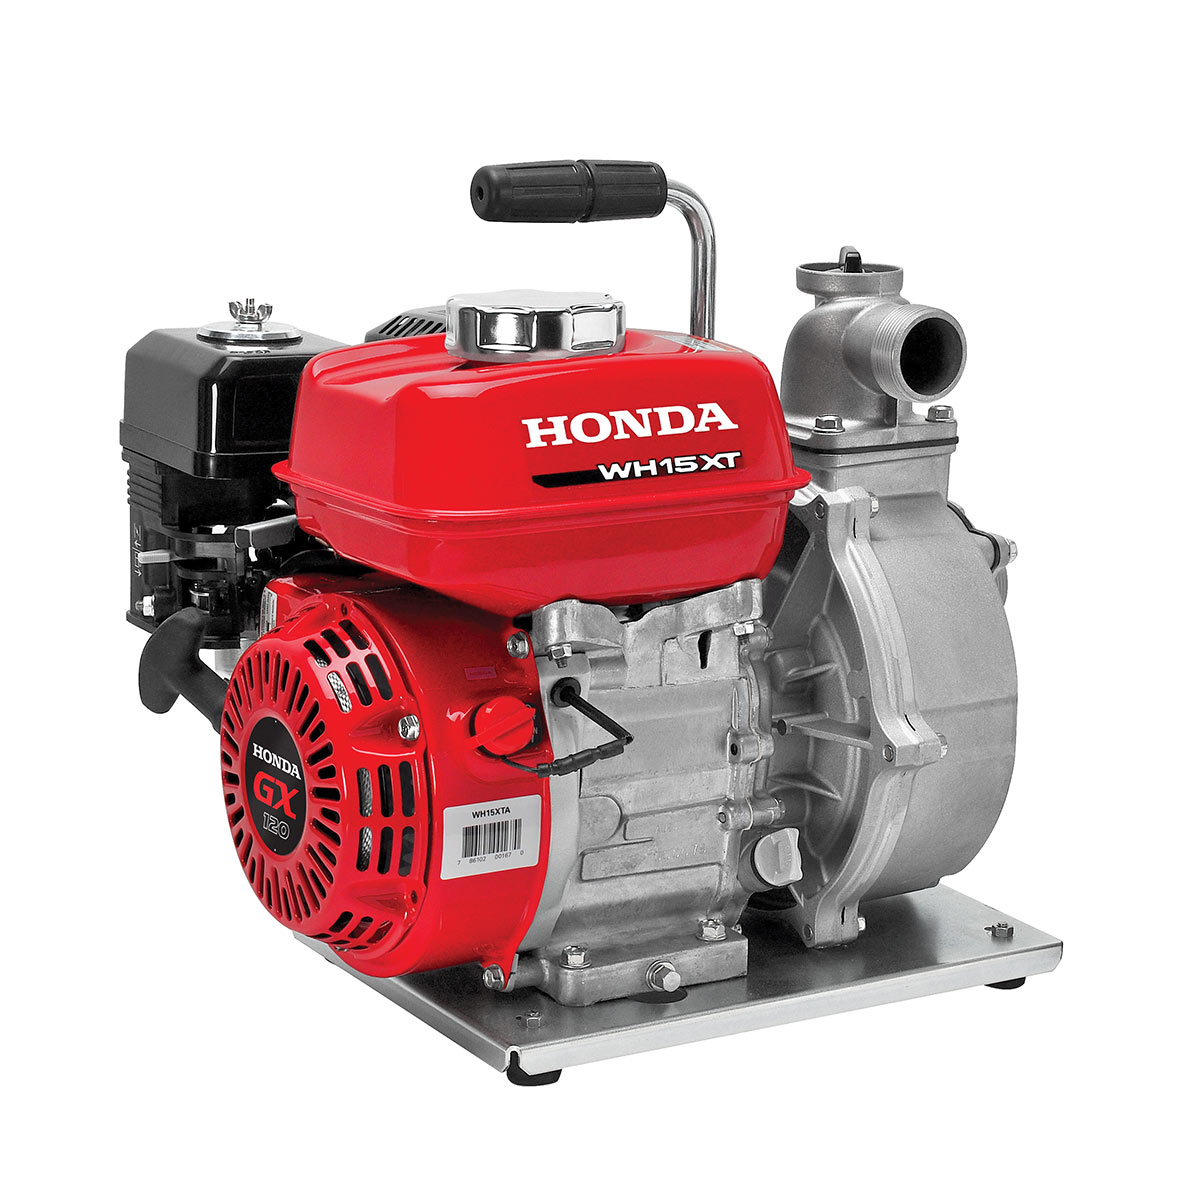 Honda WH15 High Pressure Pump (1.5")